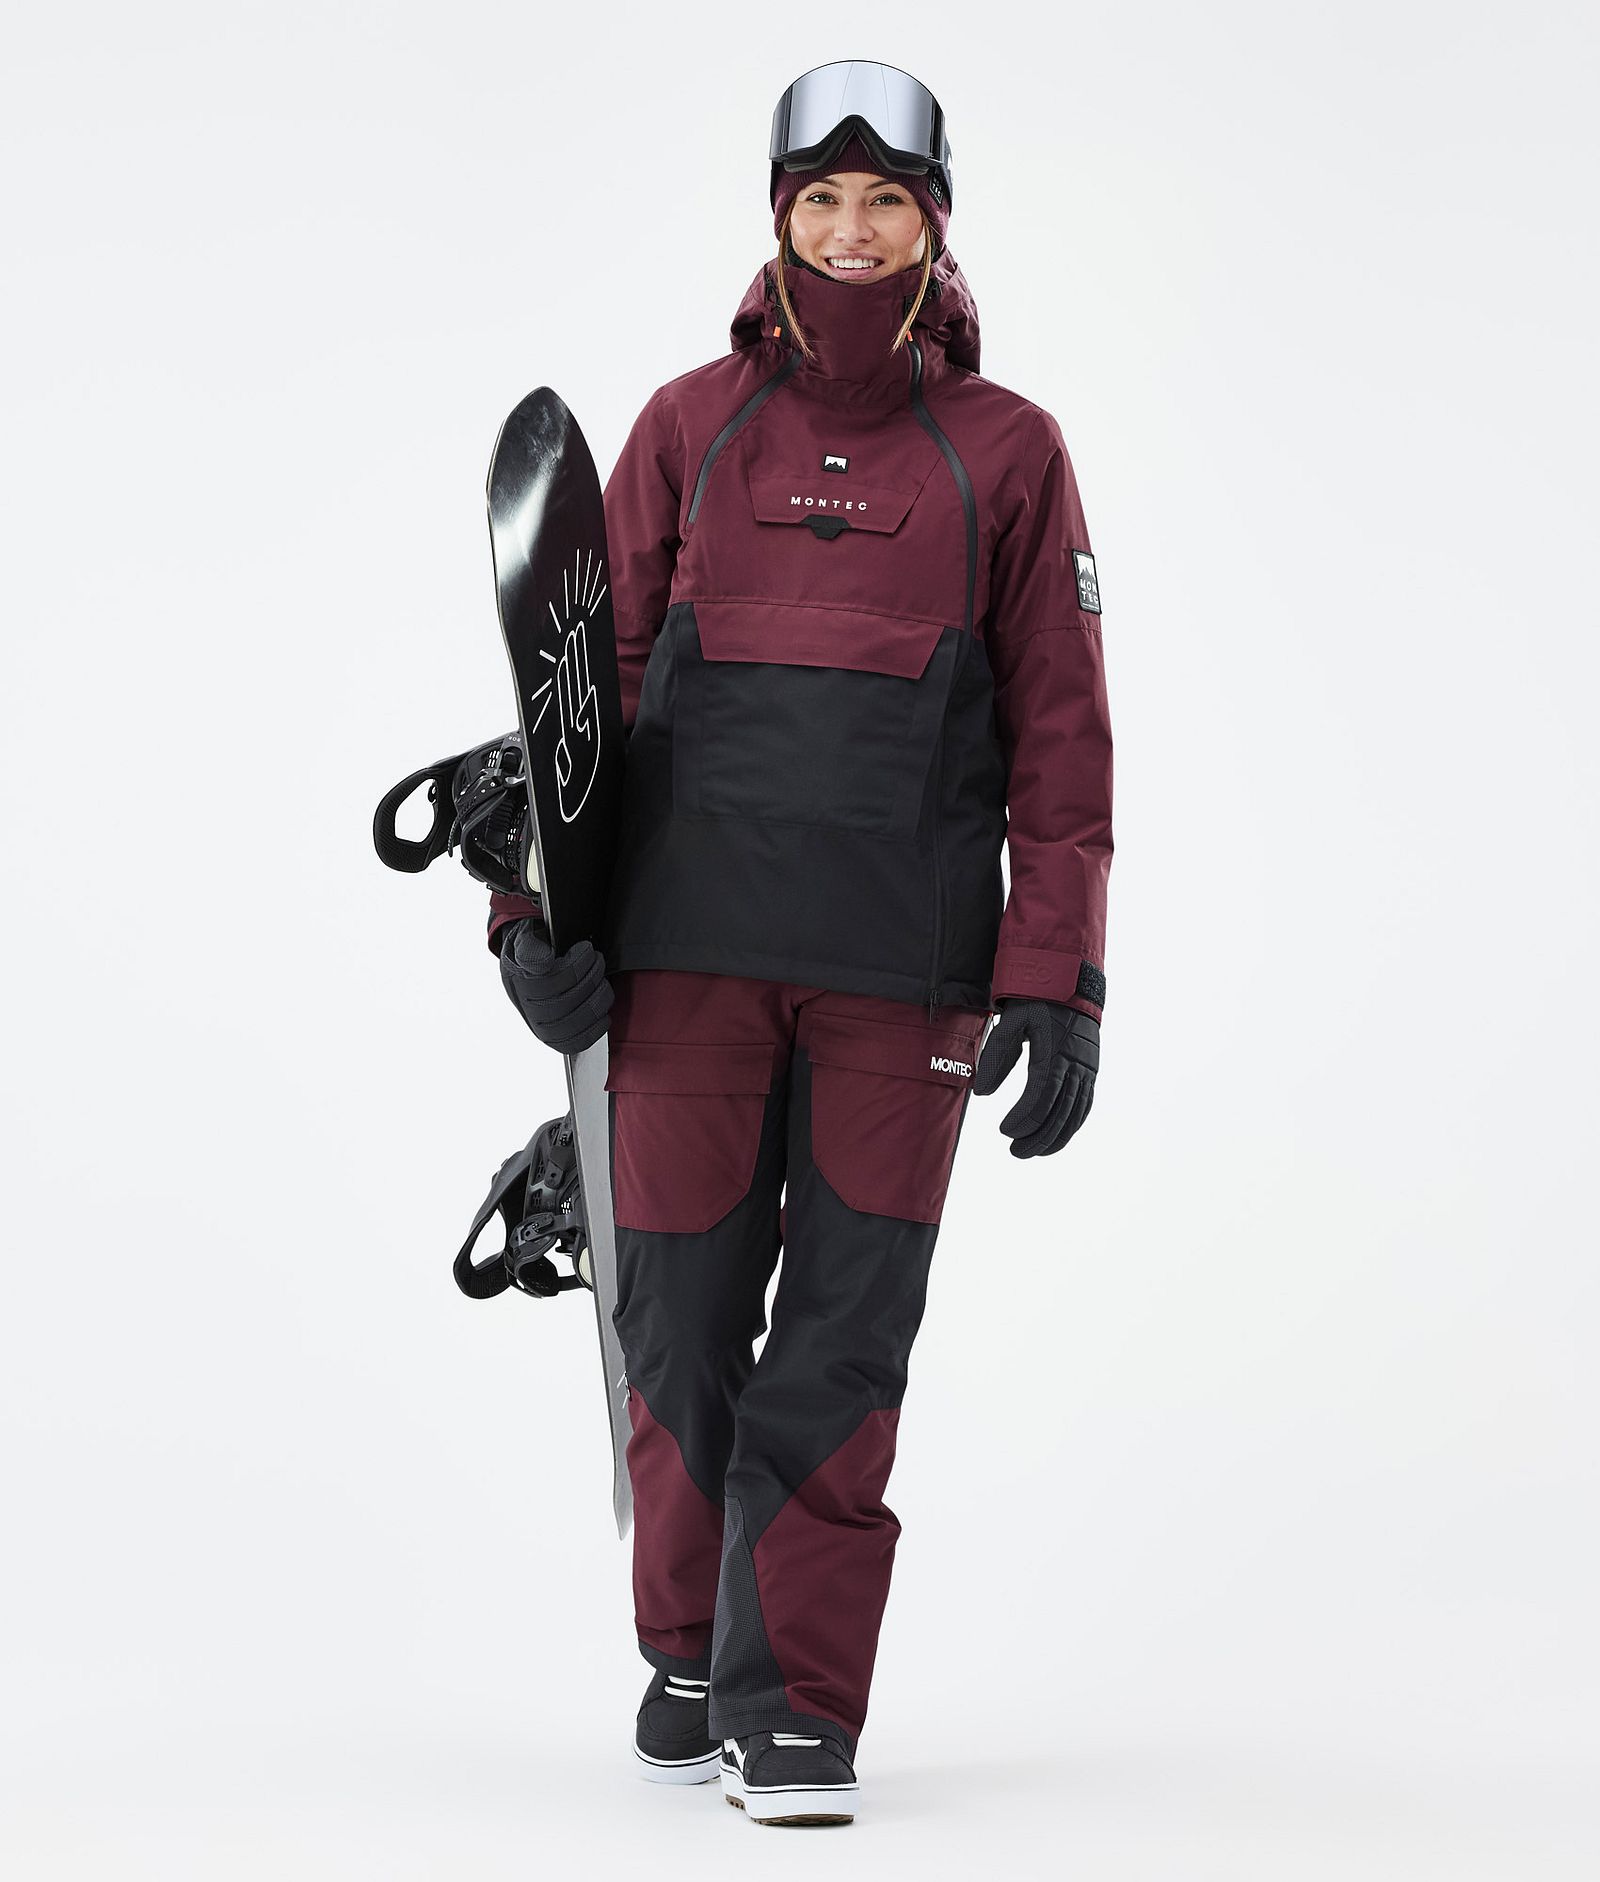 Montec Fawk W Pantalon de Snowboard Femme Burgundy/Black